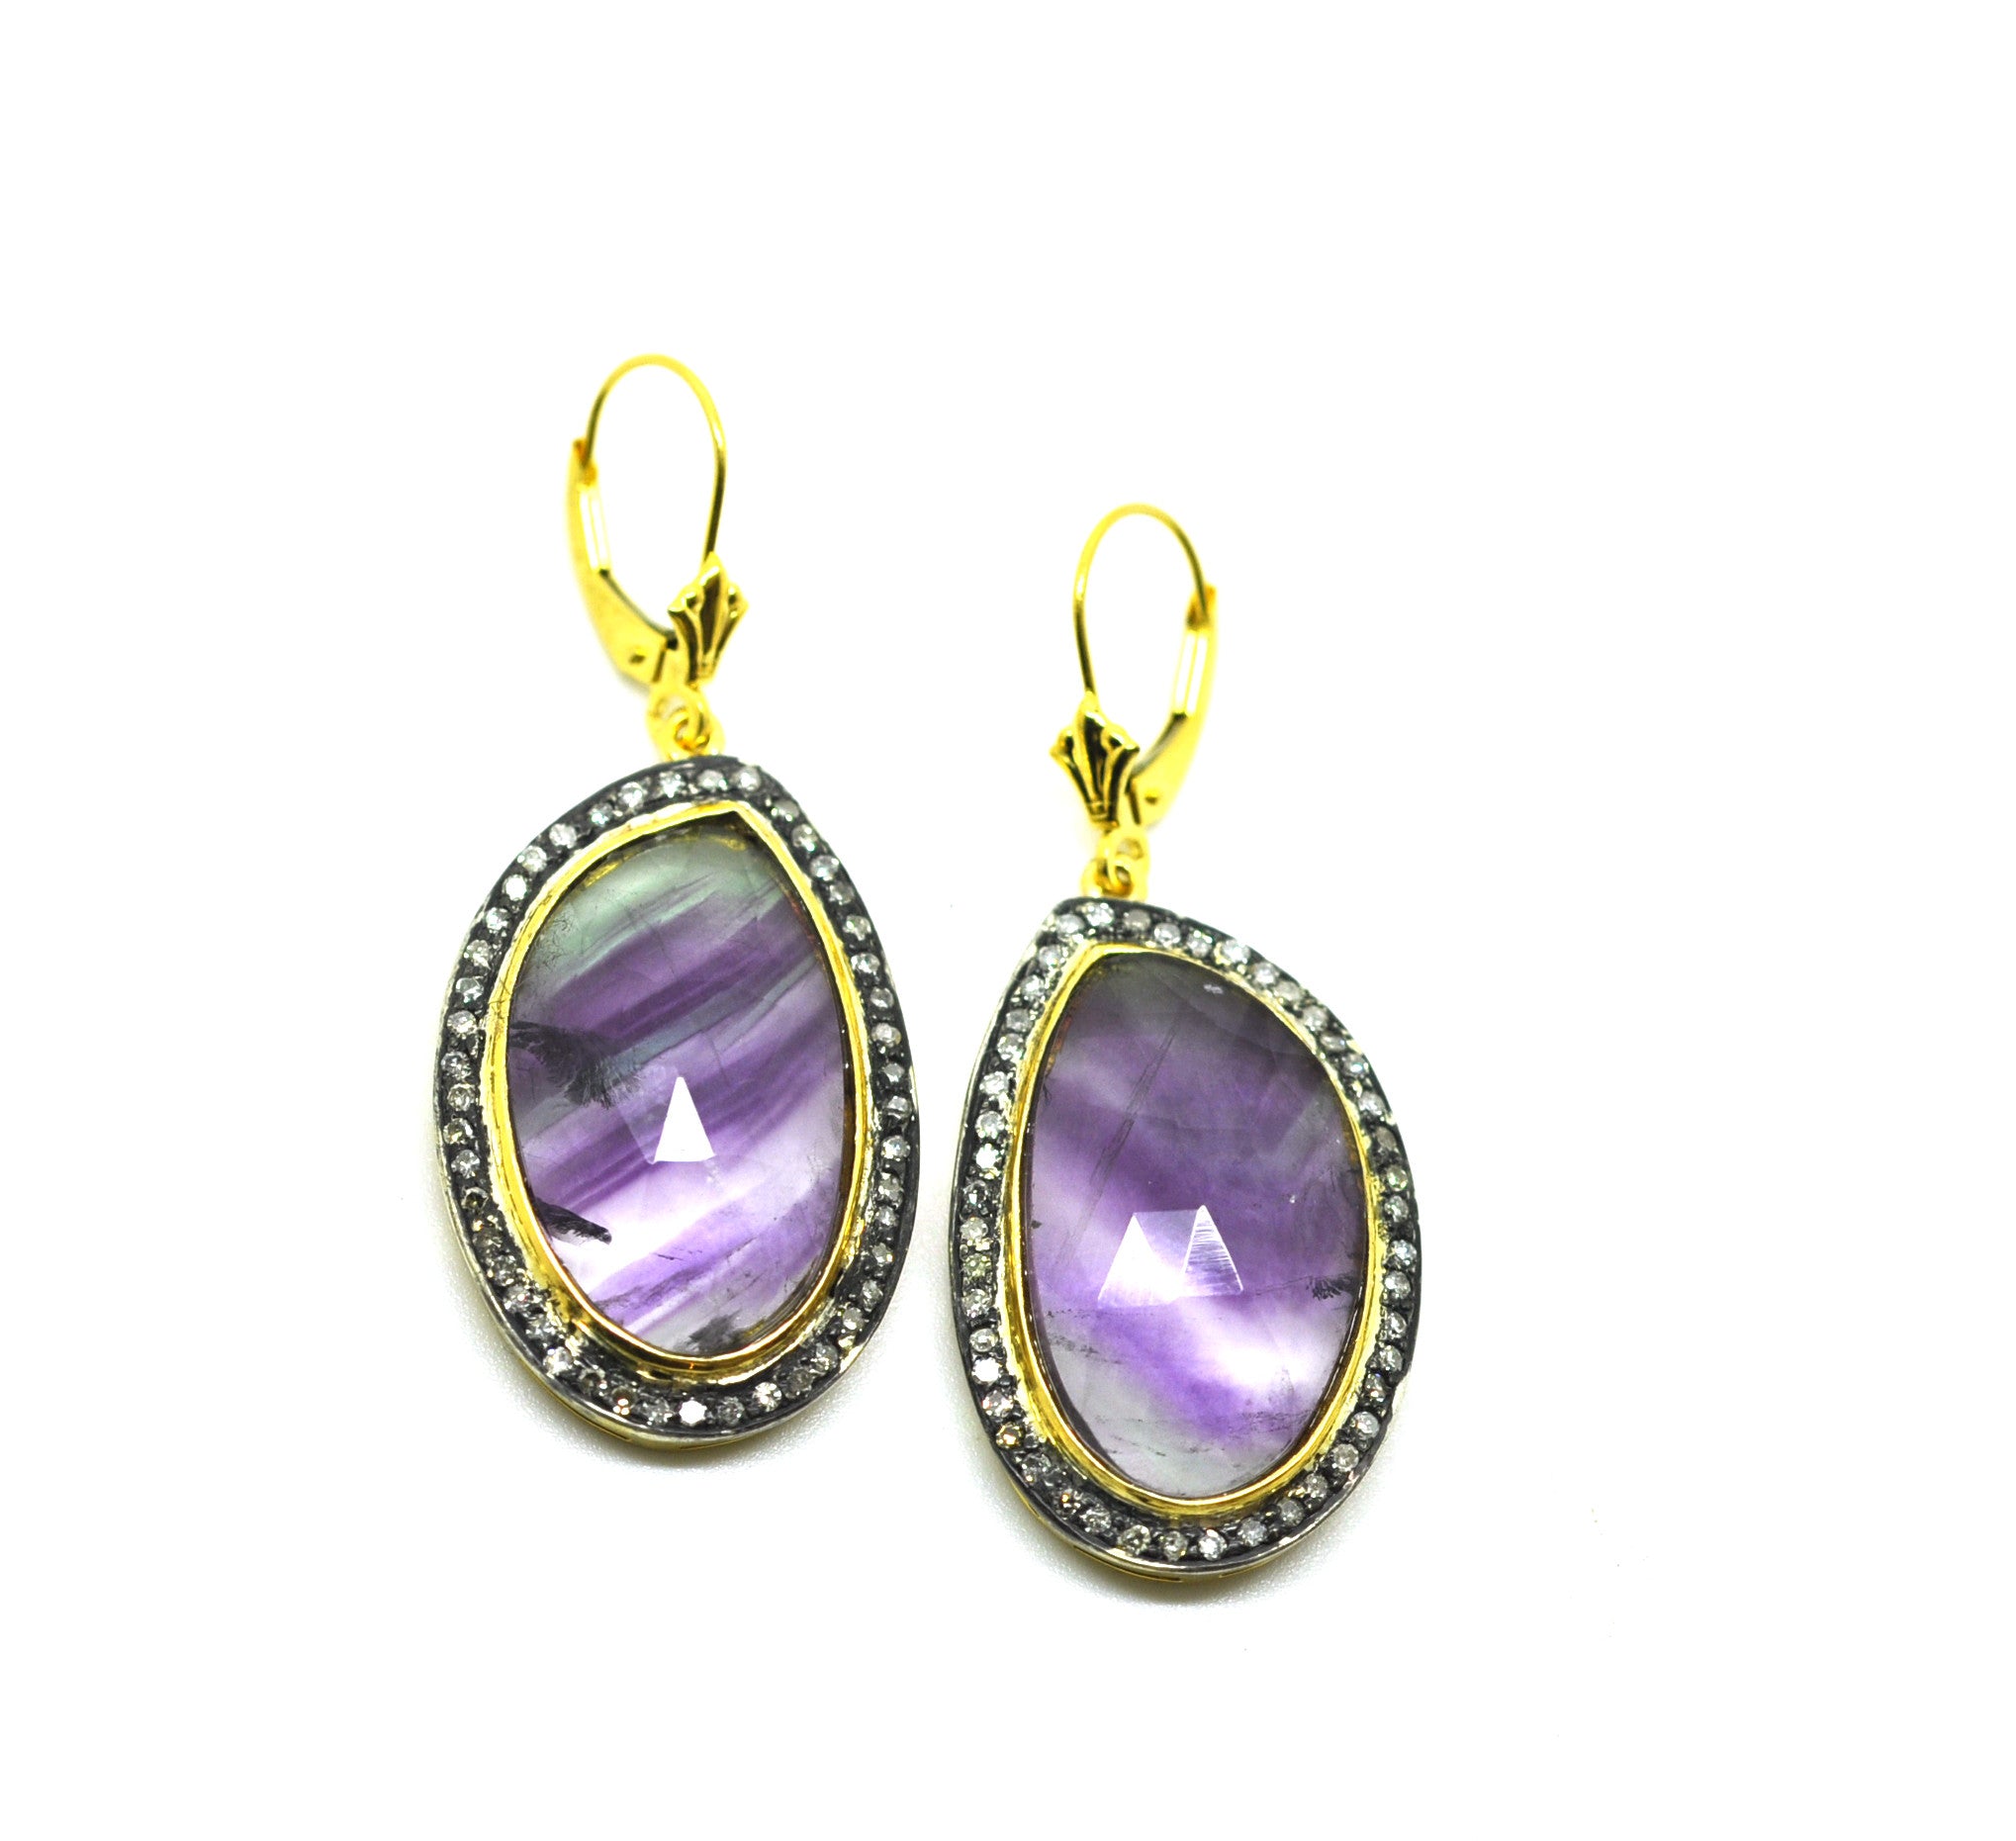 SOLD - NEW Diamond and Fluorite earrings